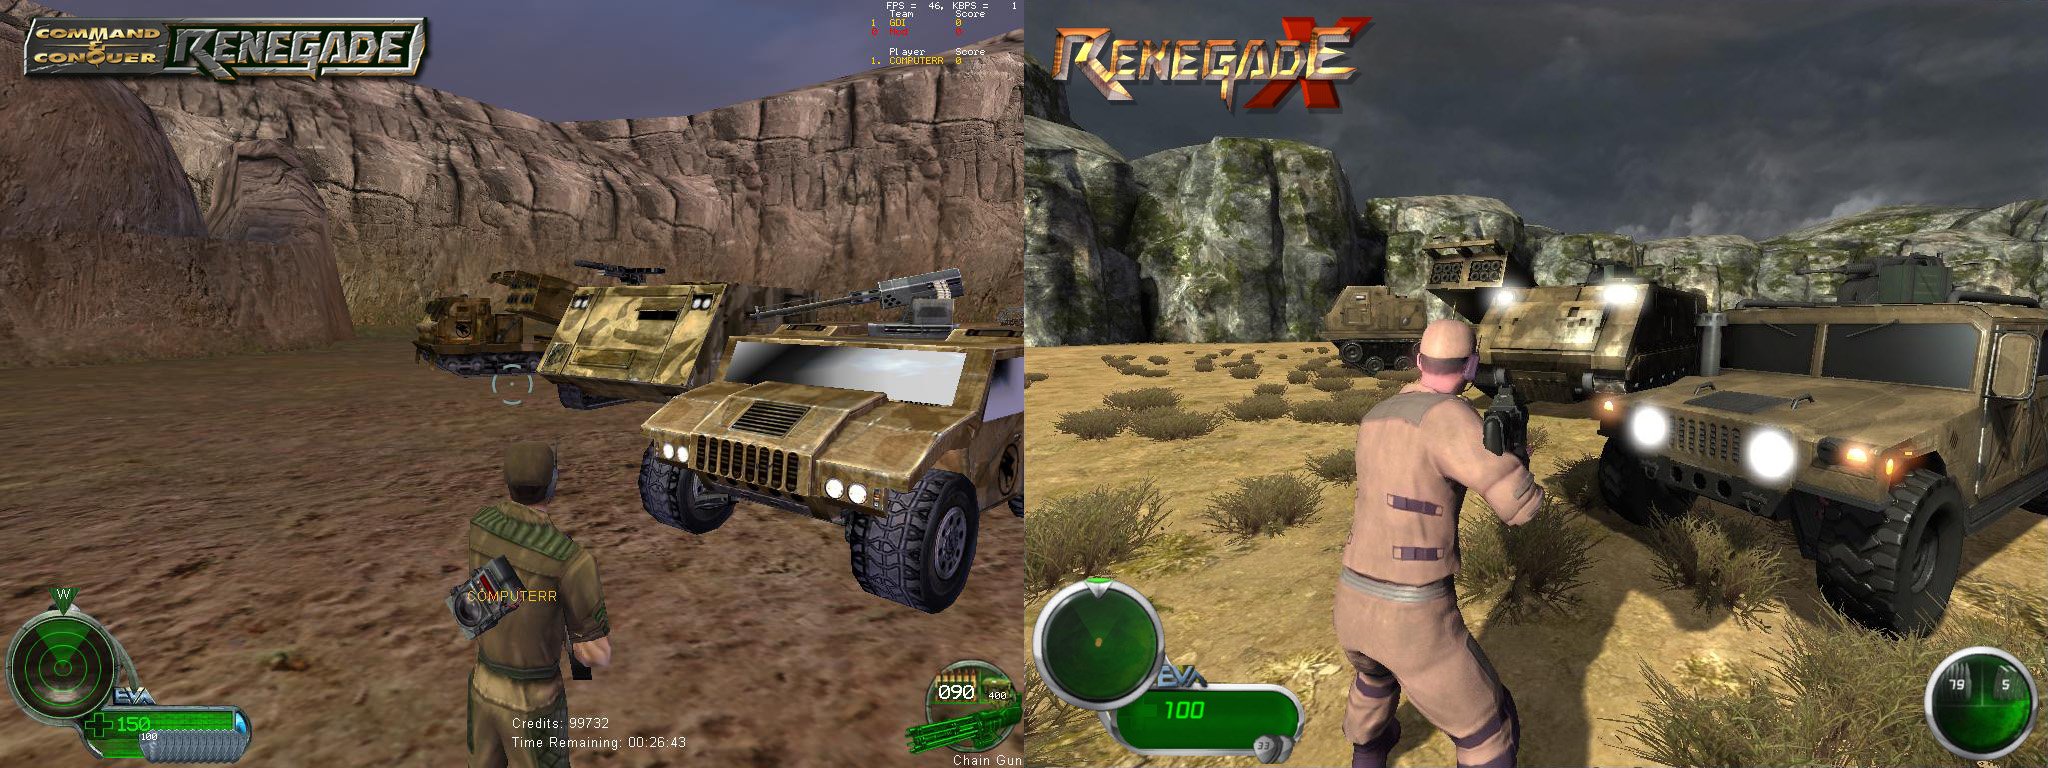 Ardor gaming renegade. Command Conquer Renegade 2014. Command Conquer Renegade 3. Command and Conquer Renegade Remastered. Renegade 2002.